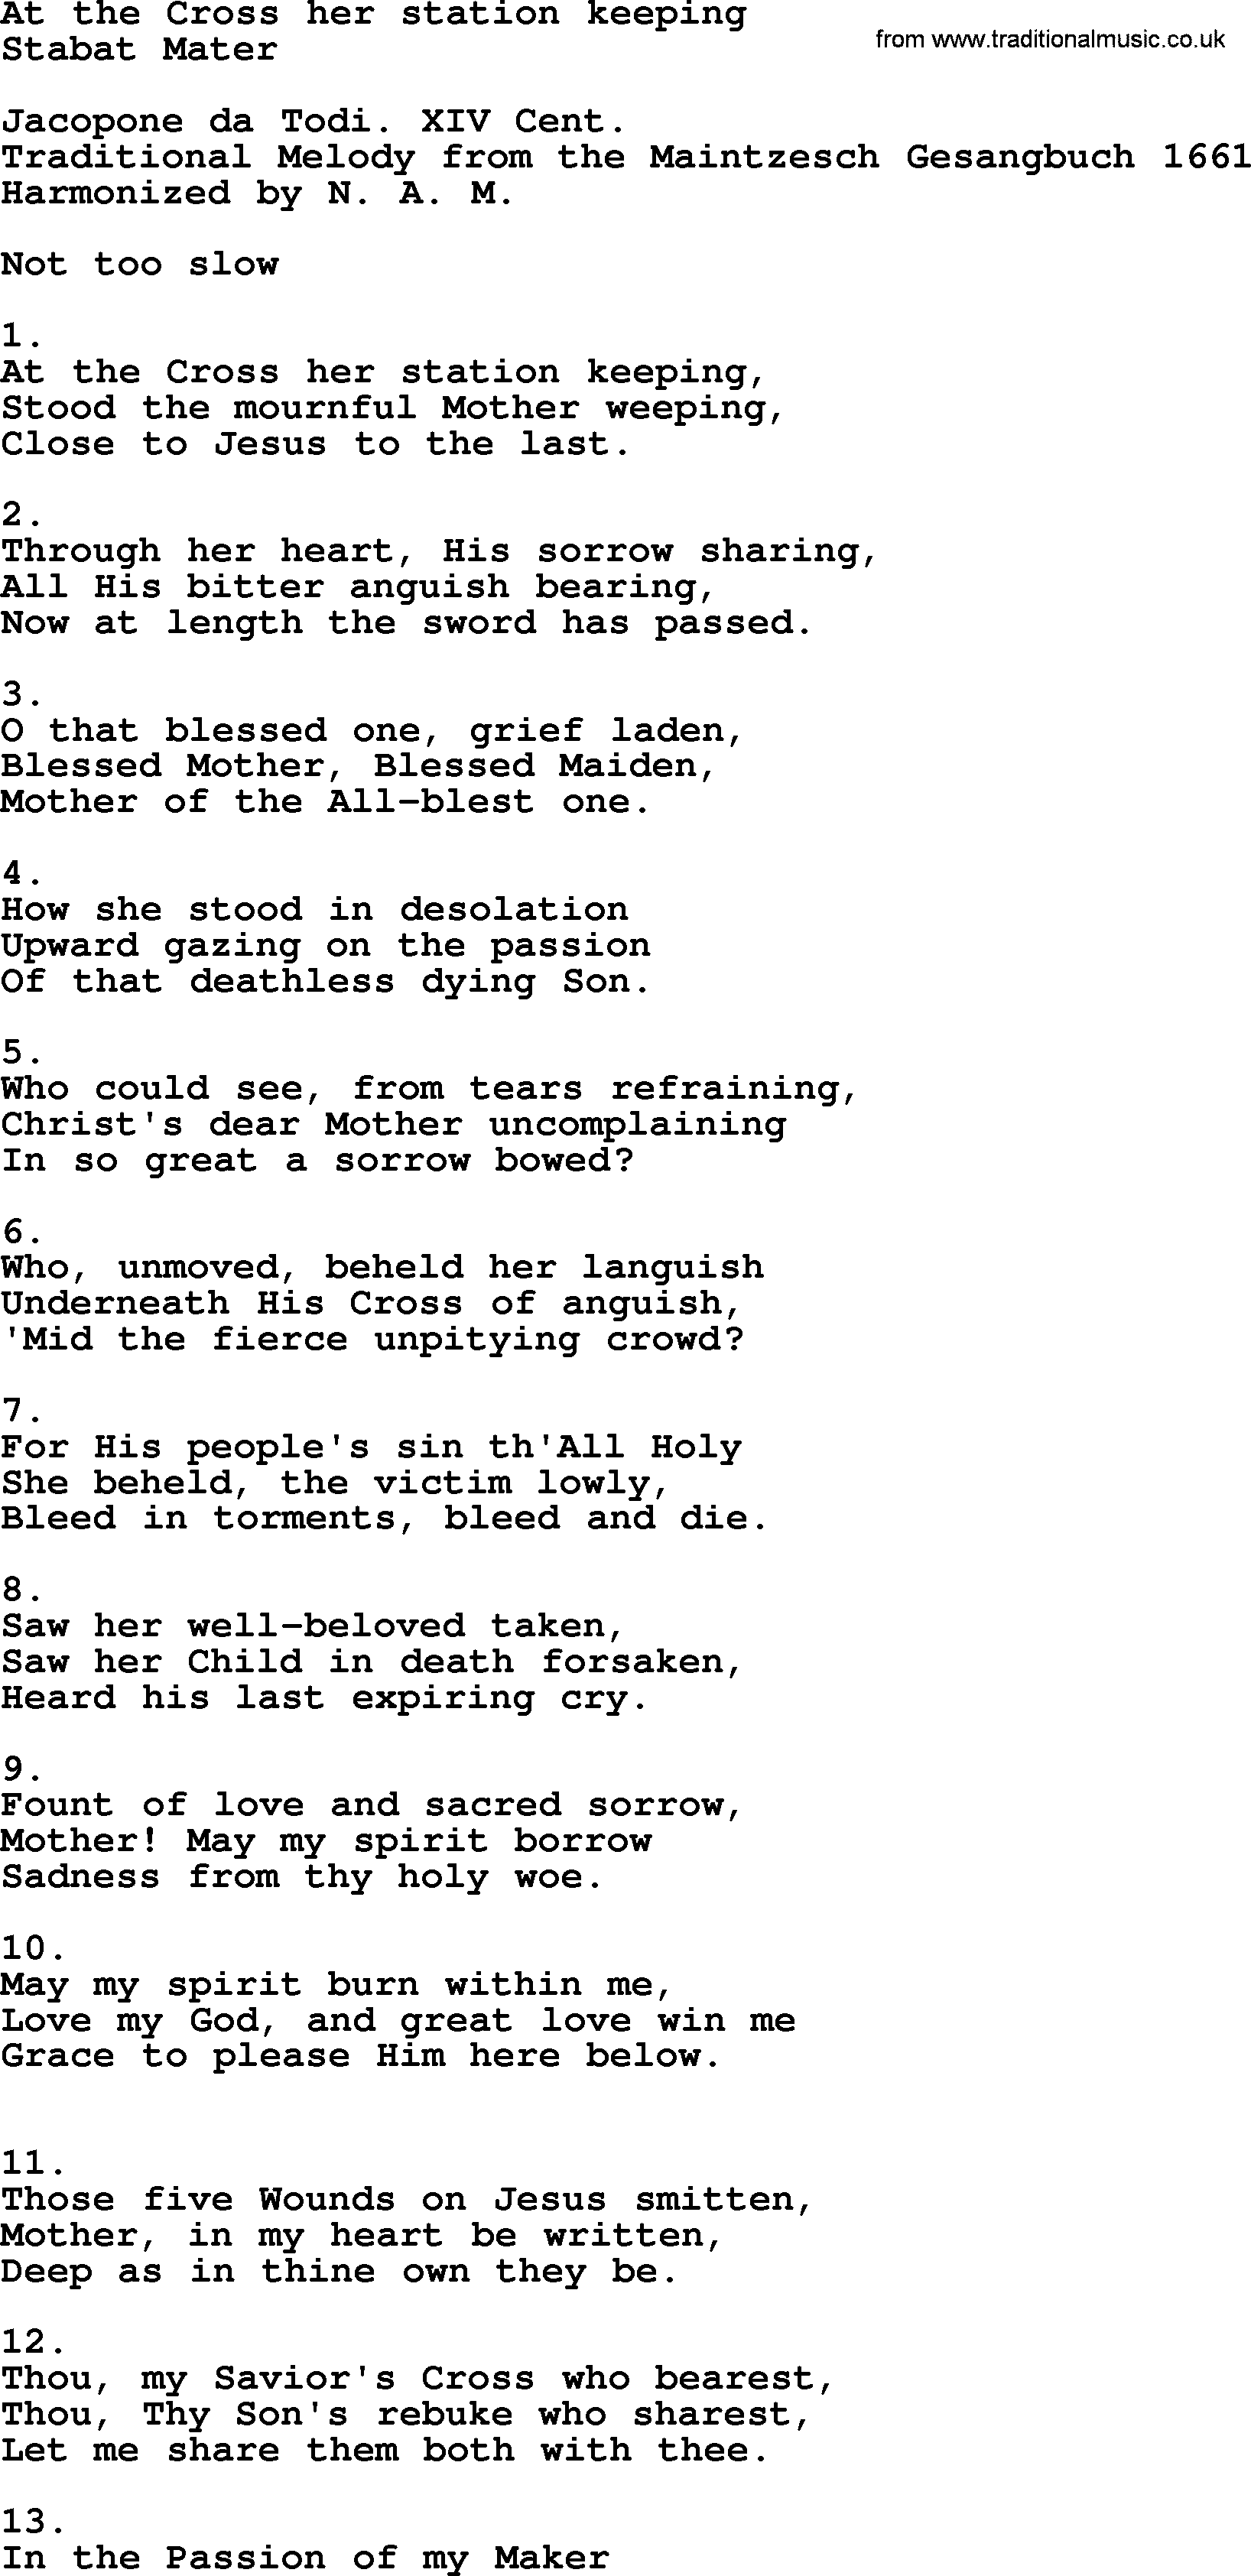 Catholic Hymn: At The Cross Her Station Keeping lyrics with PDF